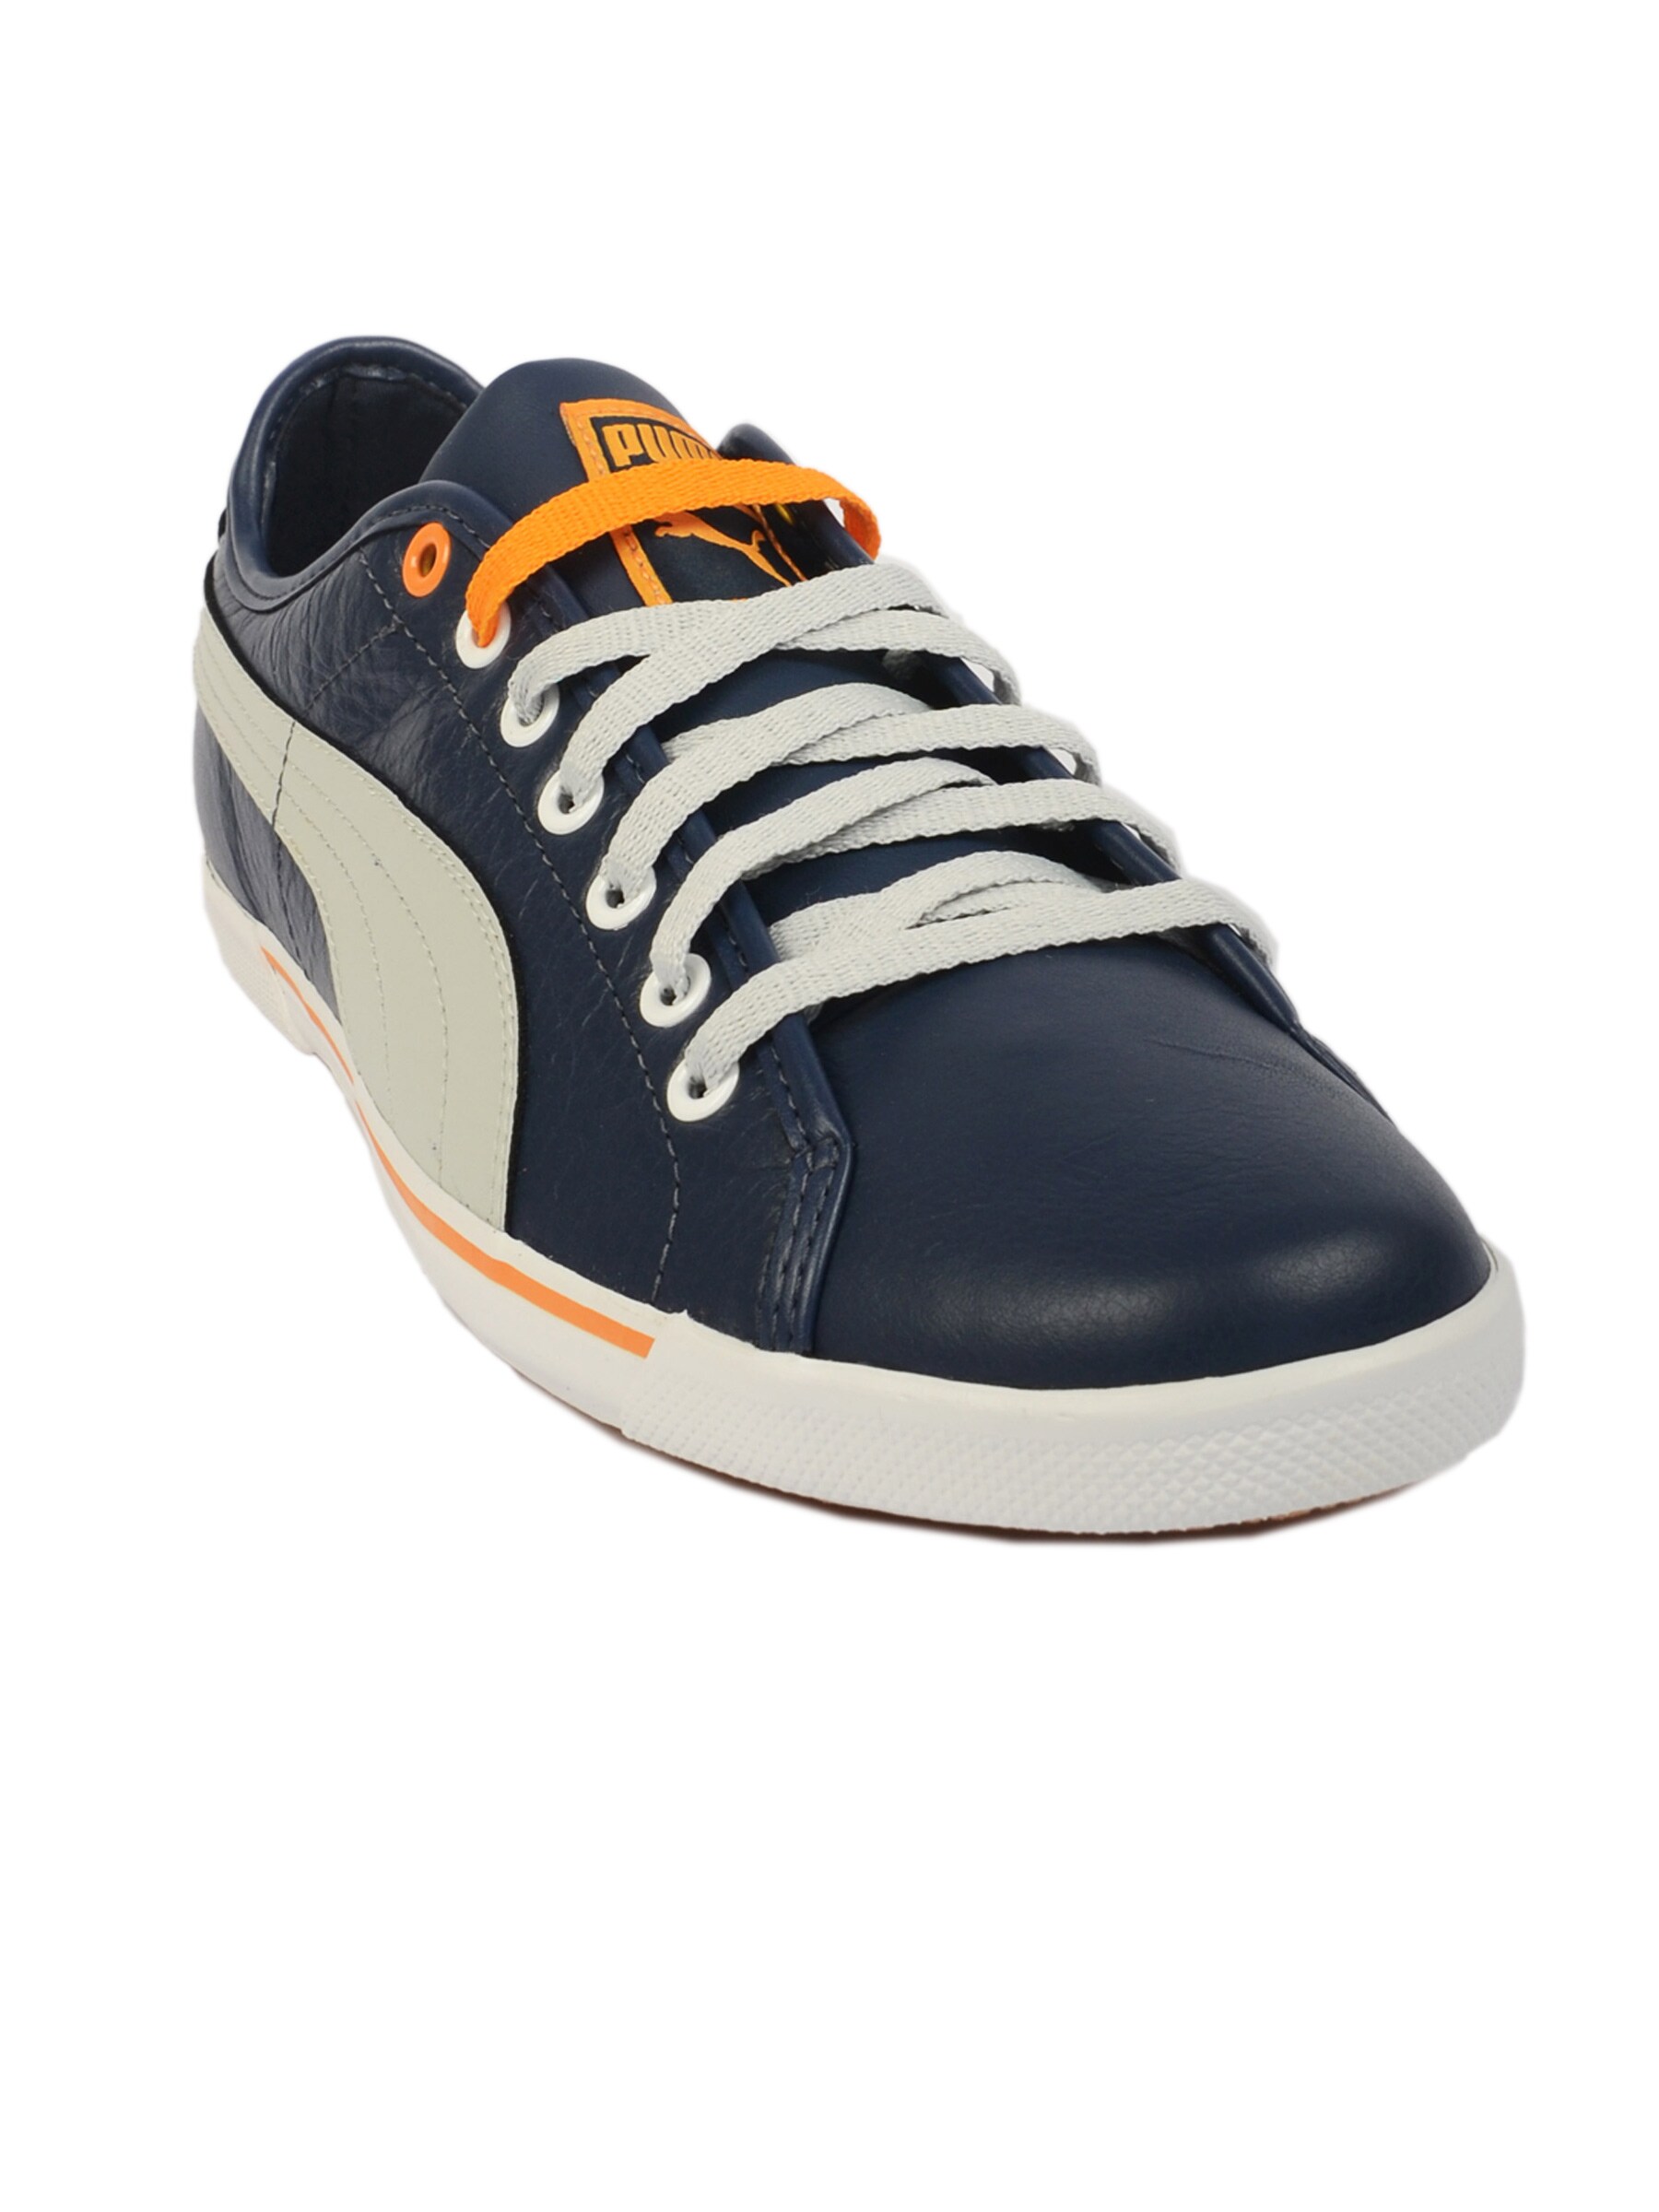 Puma Men's Bencio Leather White & Blue Shoe